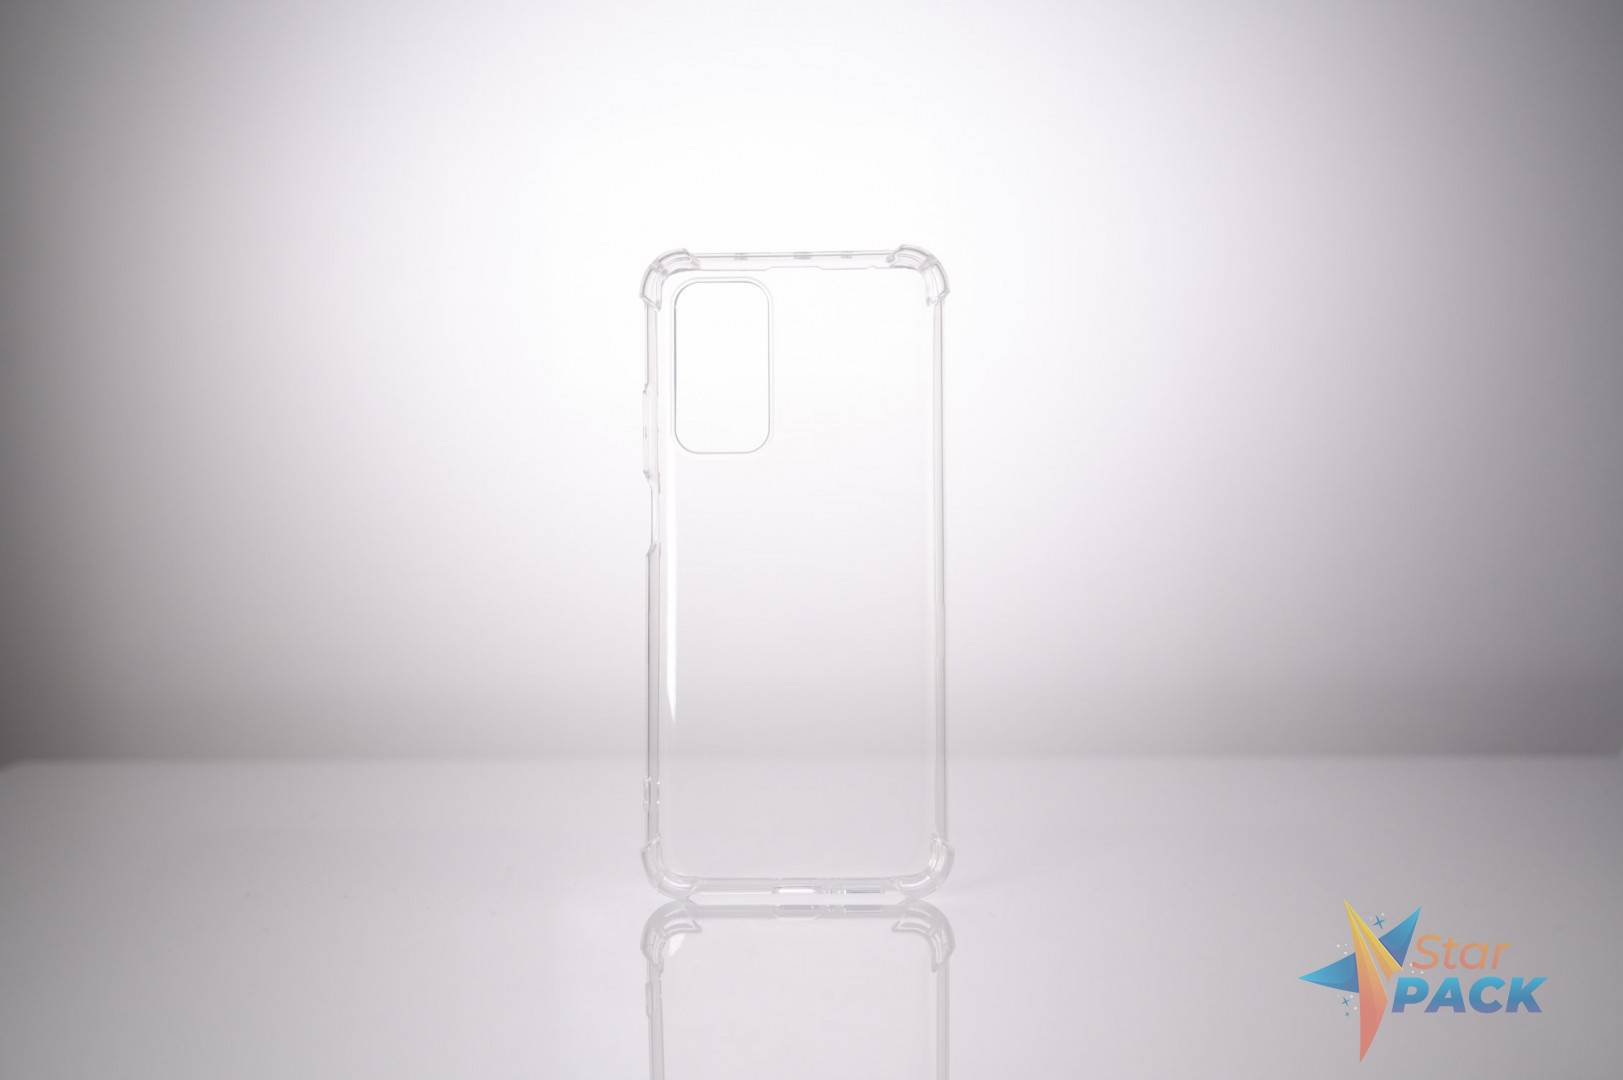 Husa Xiaomi Mi 10T 5G Spacer, transparenta,  grosime 1.5mm, protectie suplimentara antisoc la colturi, material flexibil TPU